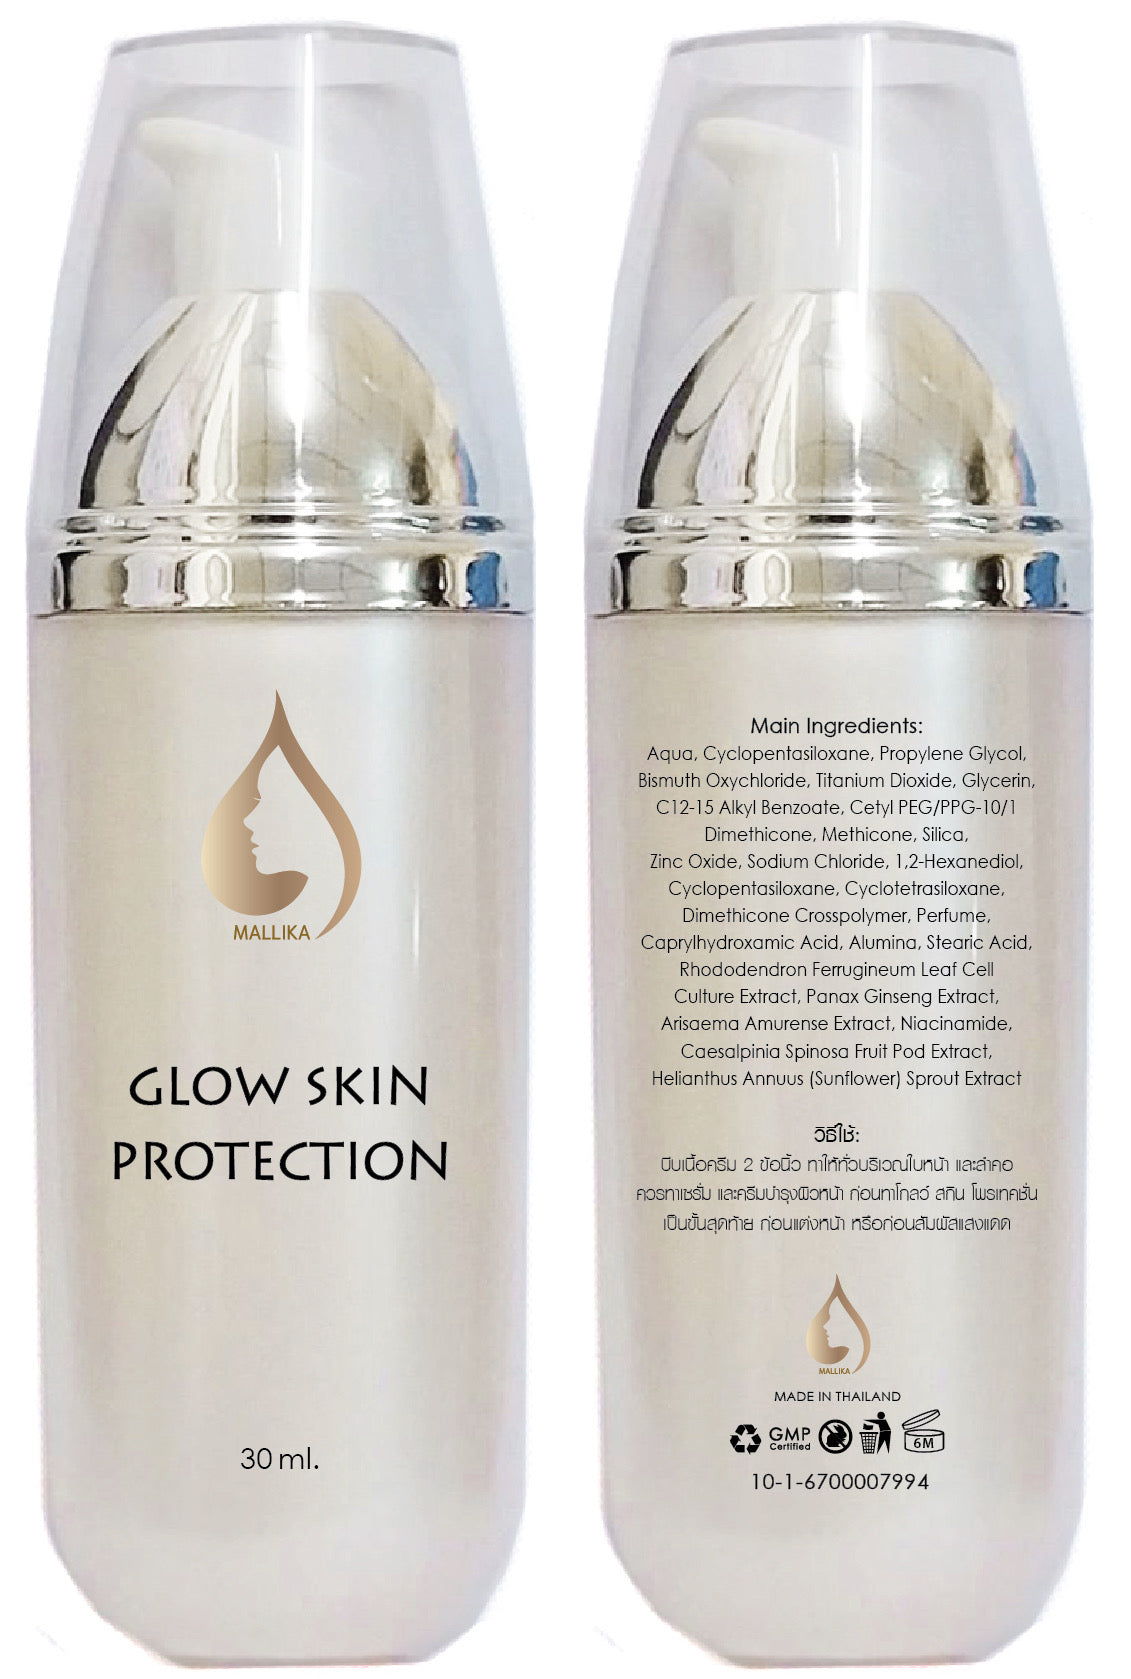 Mallika Glow Skin Protection spf50 pa+++